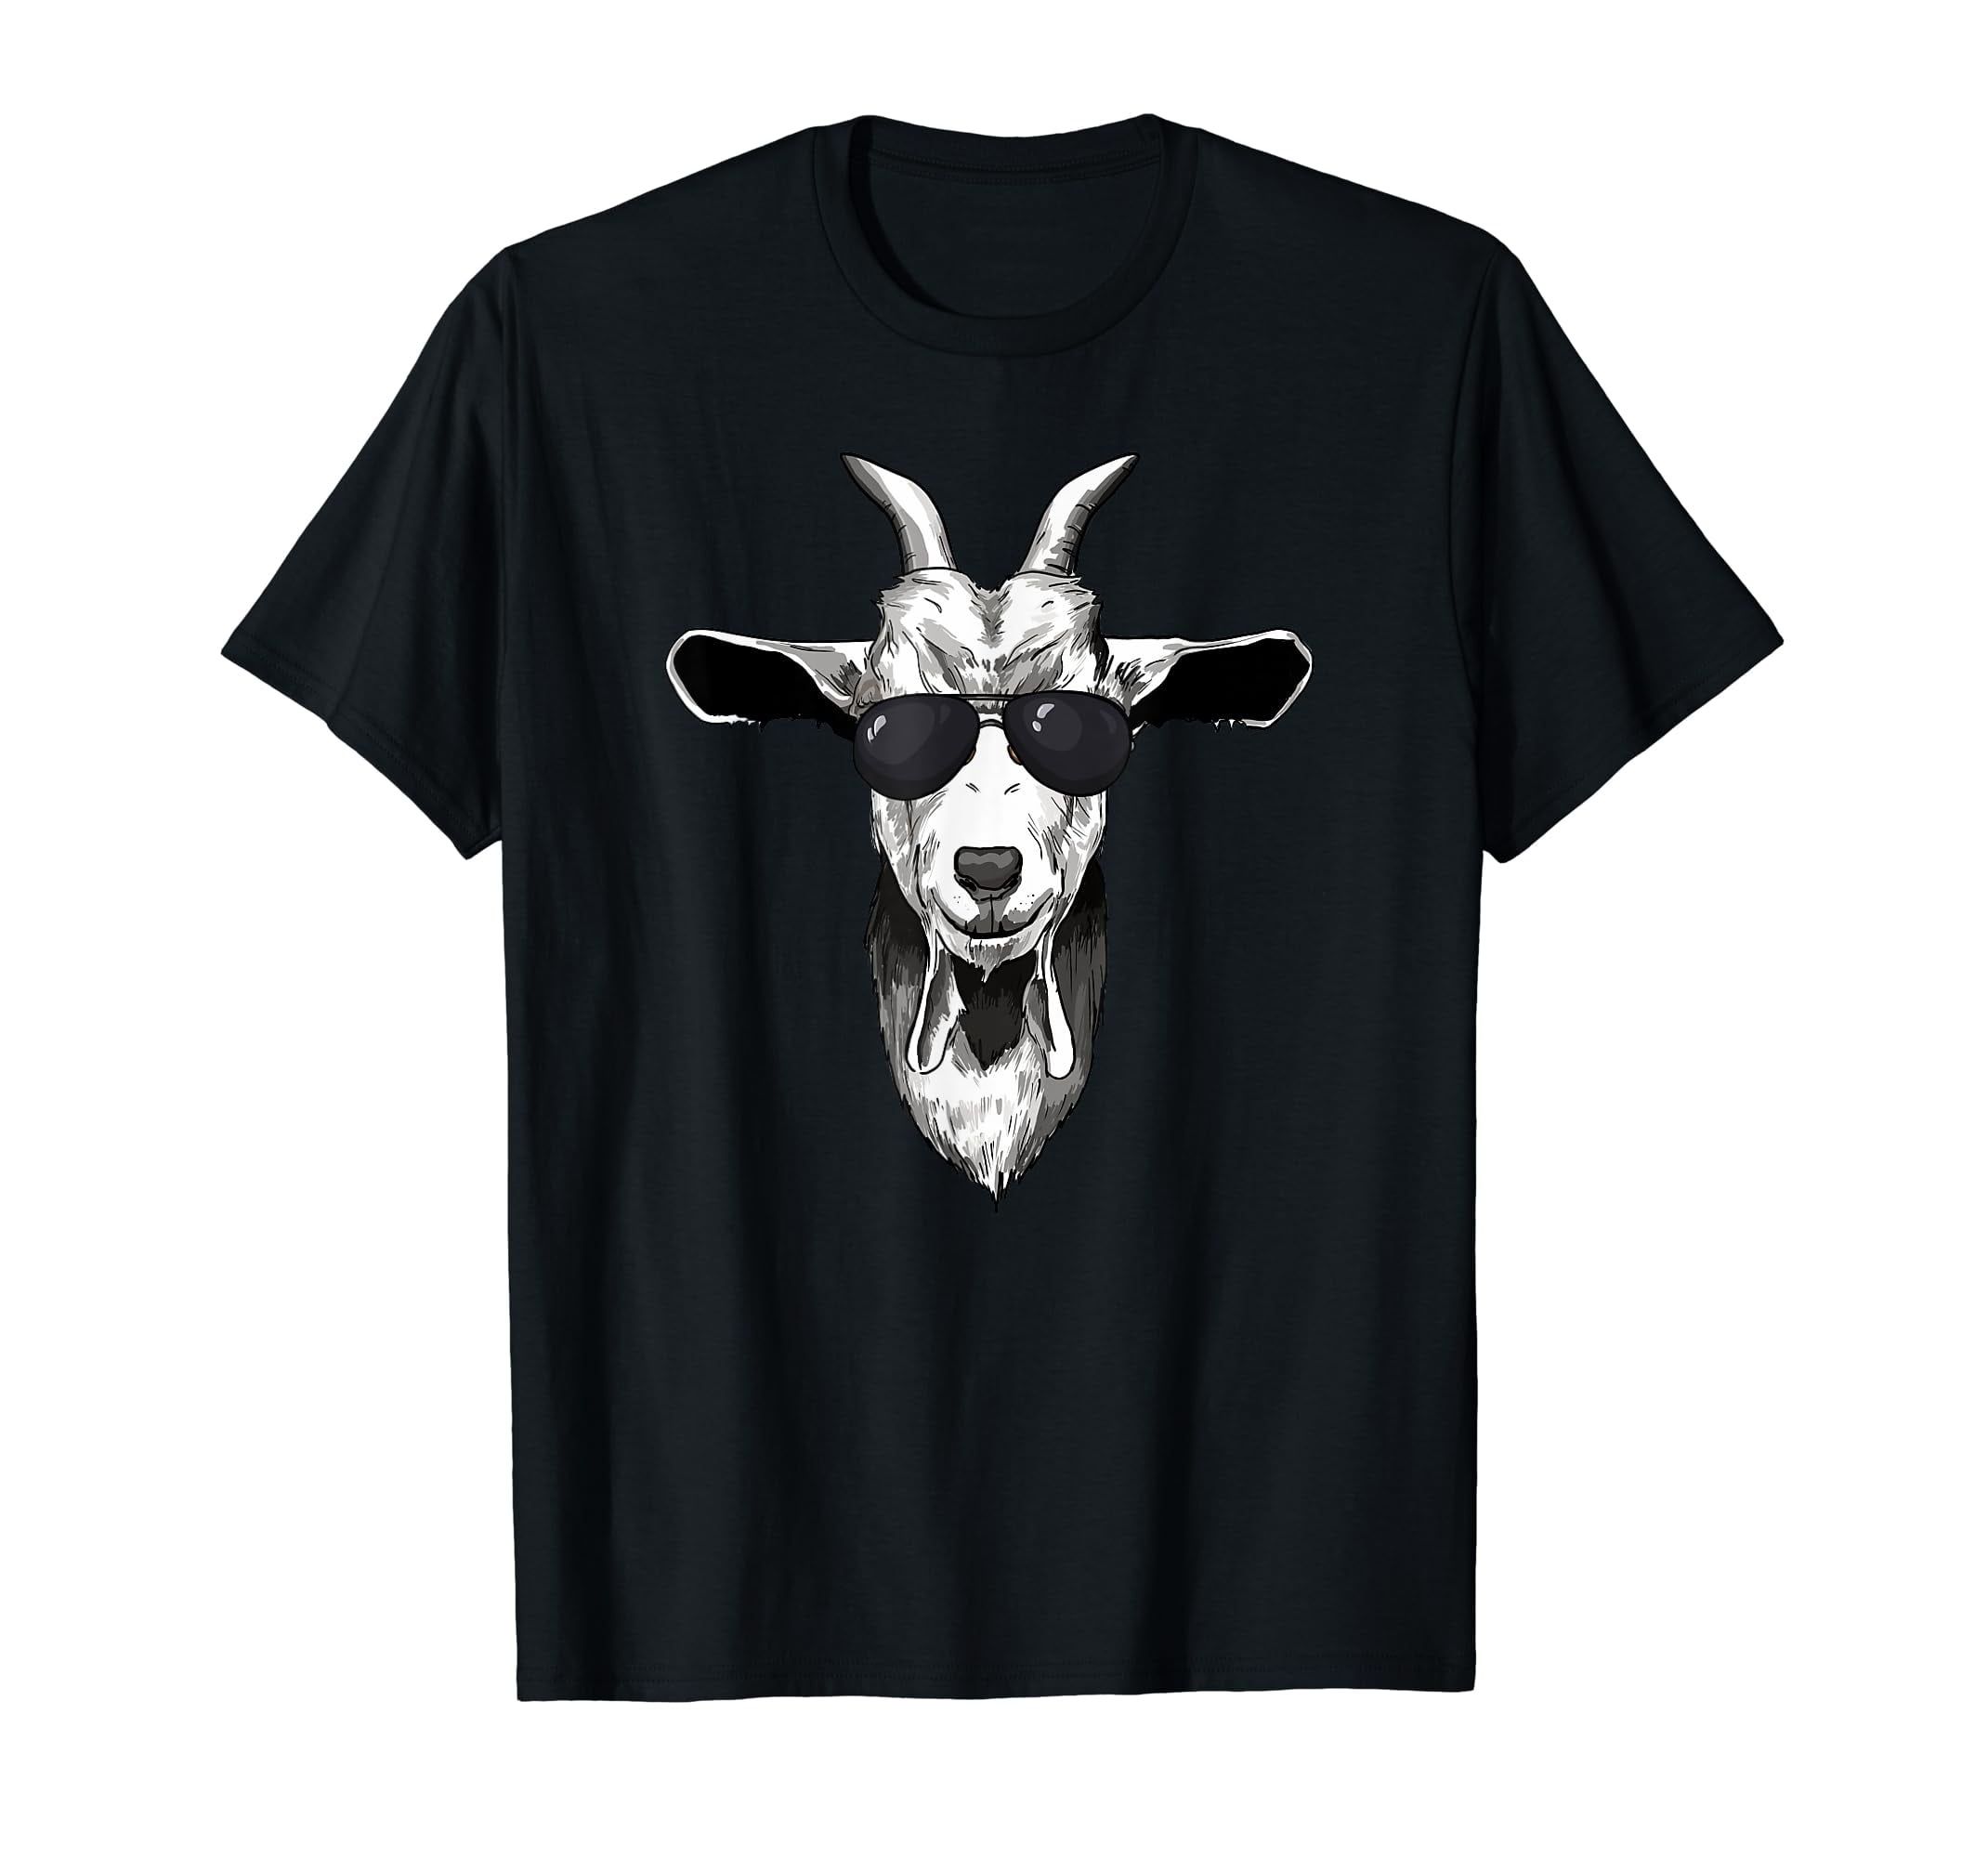 Goat with sunglasses T-Shirt - Walmart.com